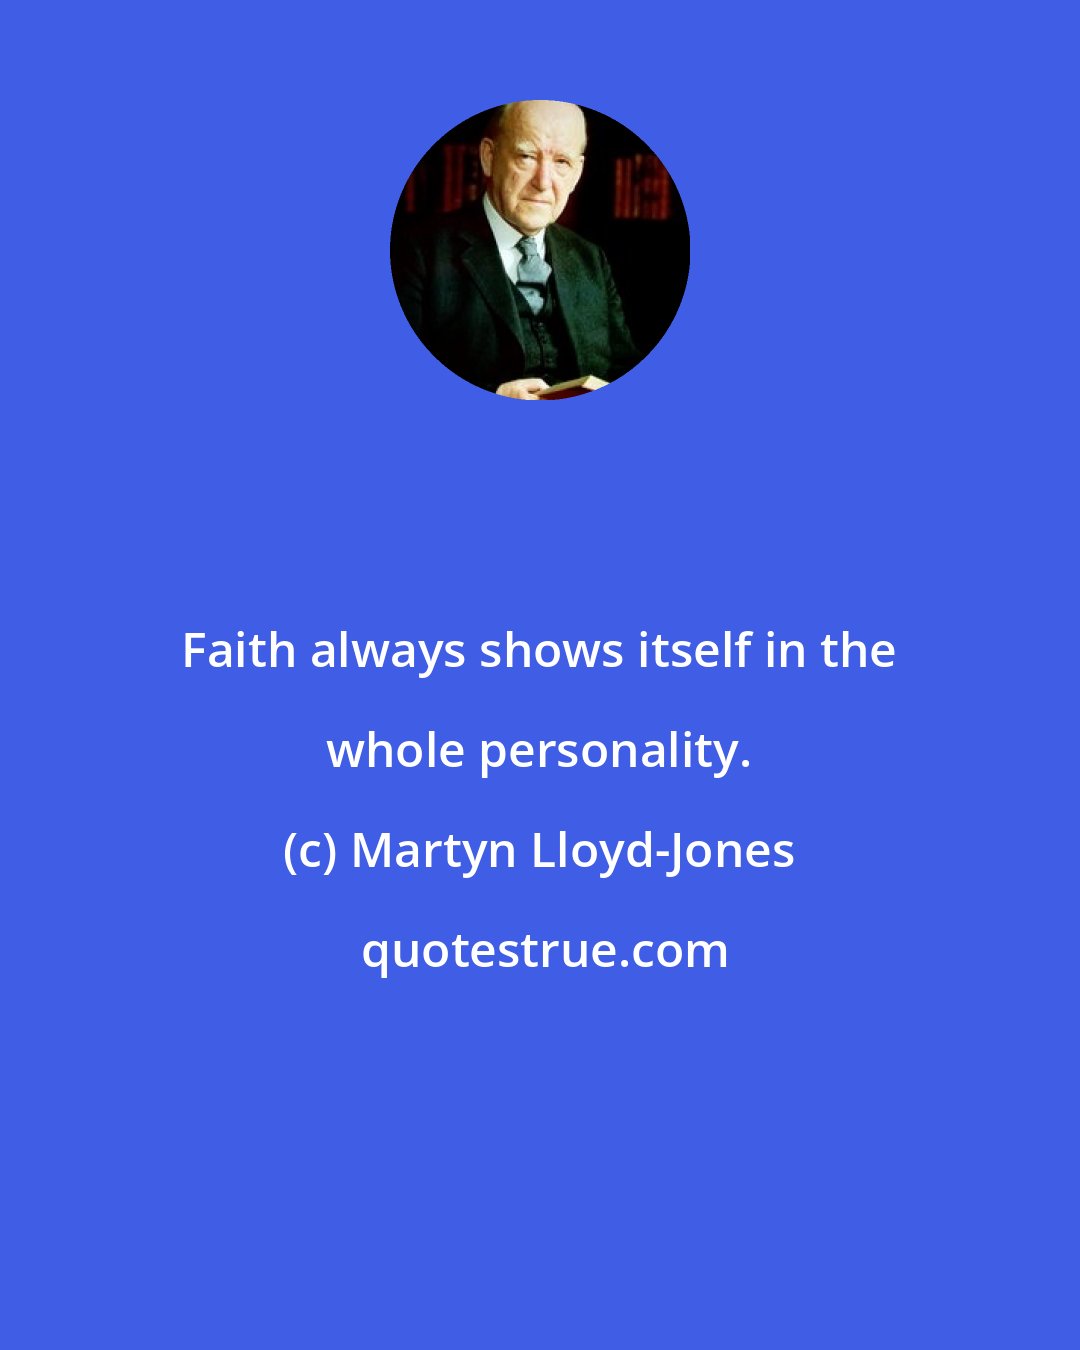 Martyn Lloyd-Jones: Faith always shows itself in the whole personality.